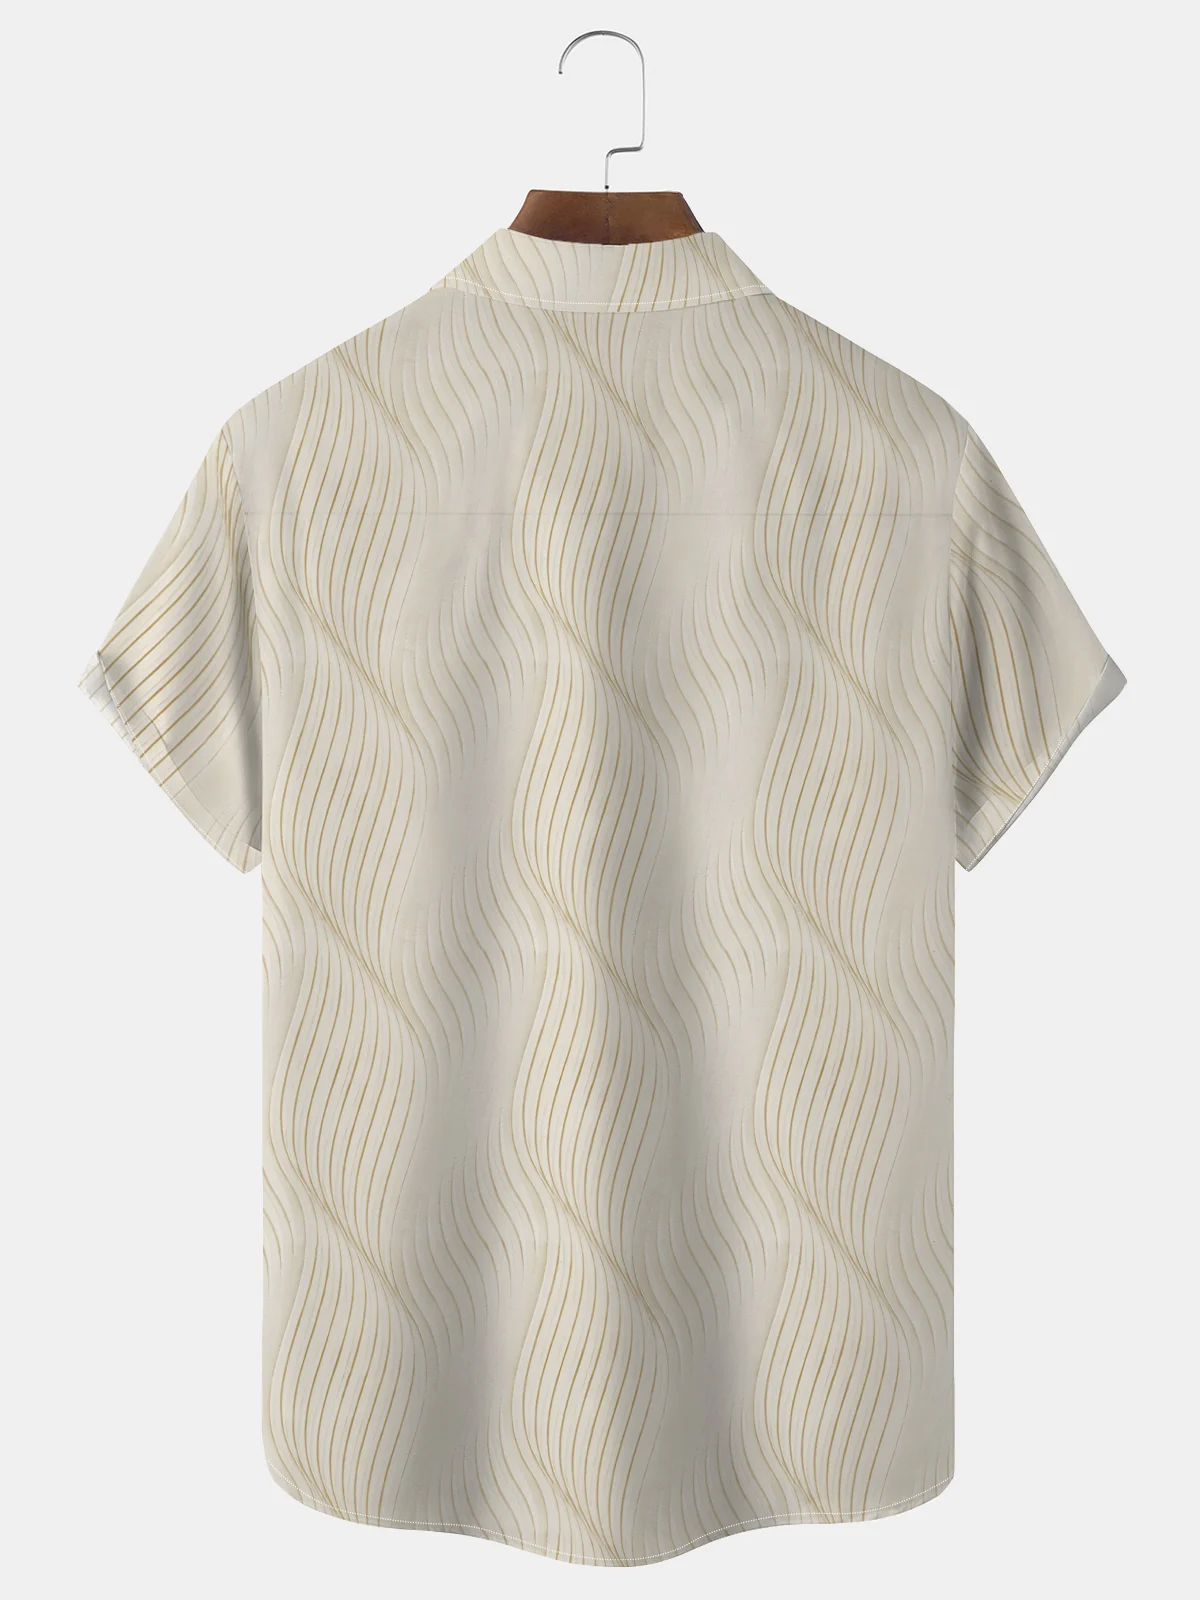 Royaura Men's Retro Geometric Textured Bowling Print Button Pocket Shirt